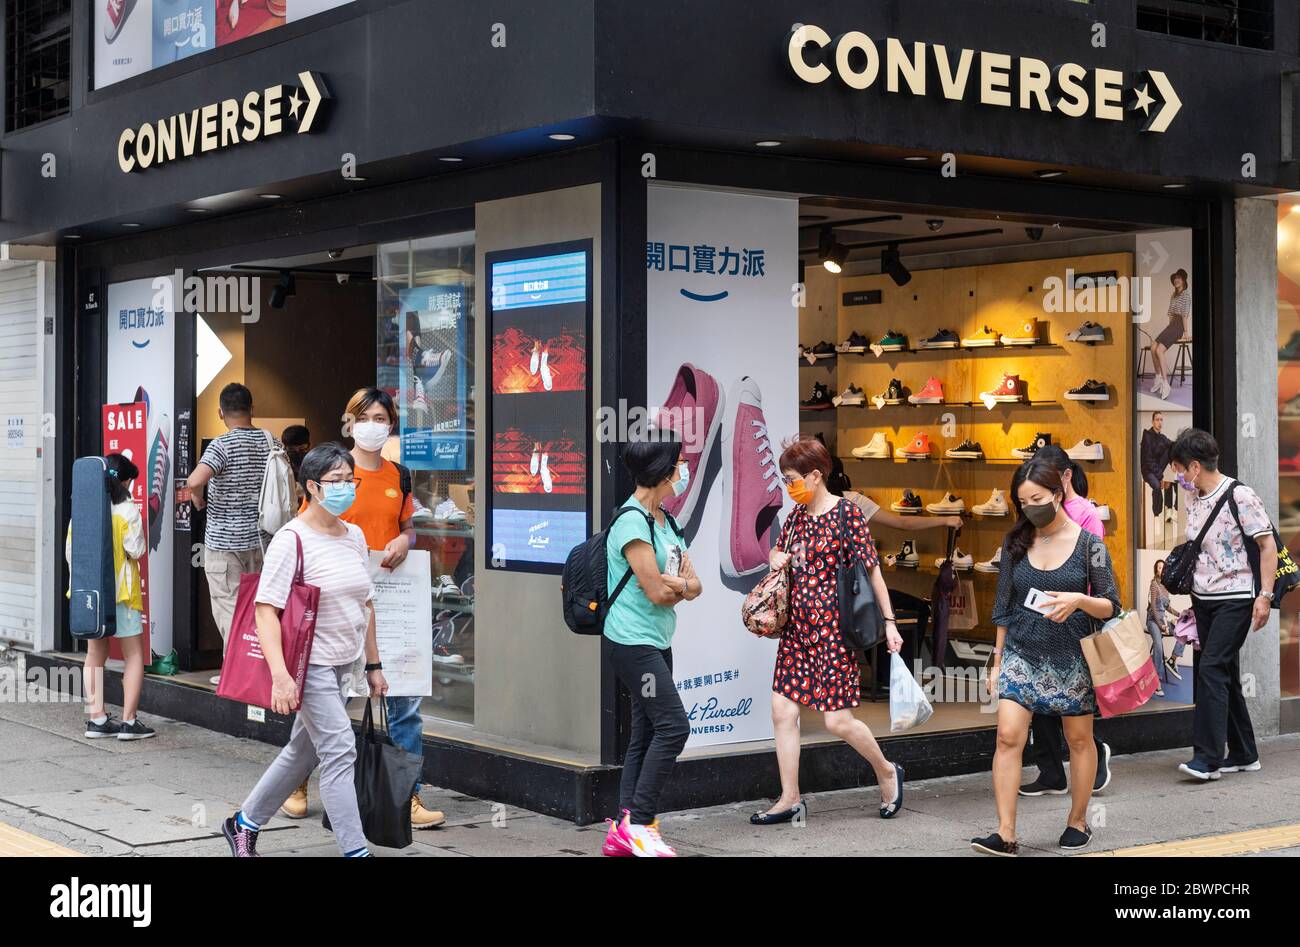 American shoe brand company Converse store seen in Hong Kong Stock Photo -  Alamy